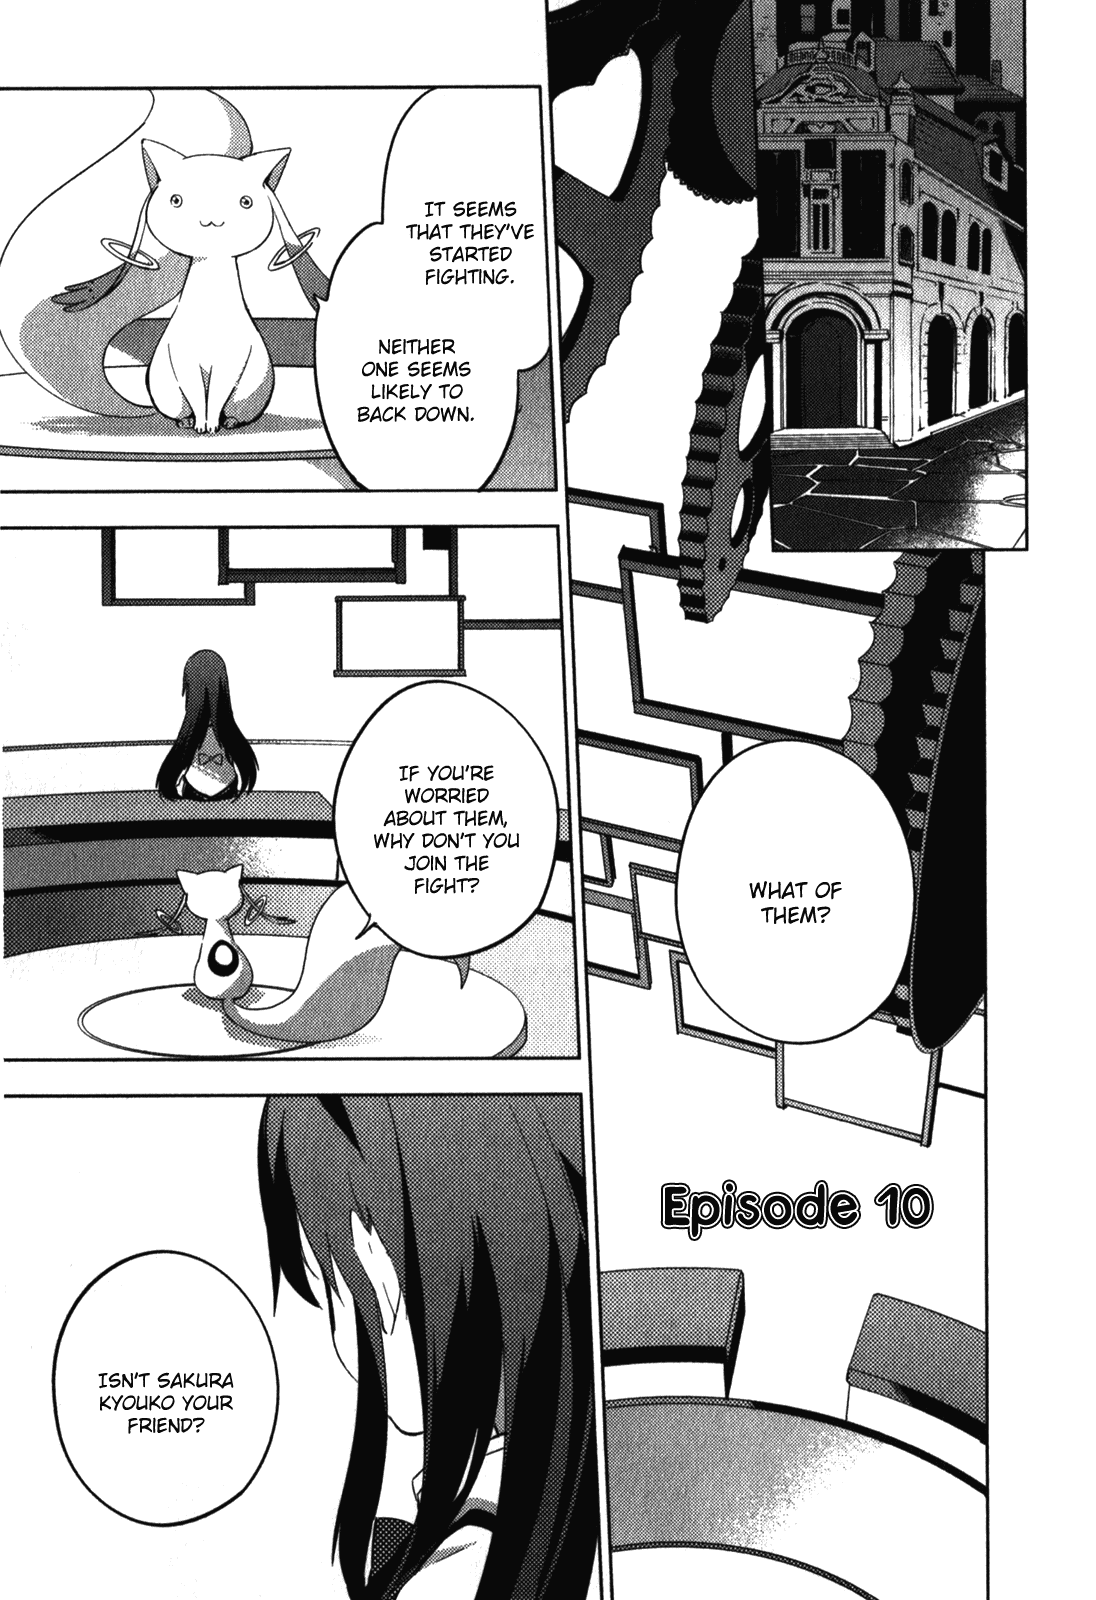 Mahou Shoujo Madoka Magica The Different Story Vol 3 Chapter 10 Episode 10 Mangahasu